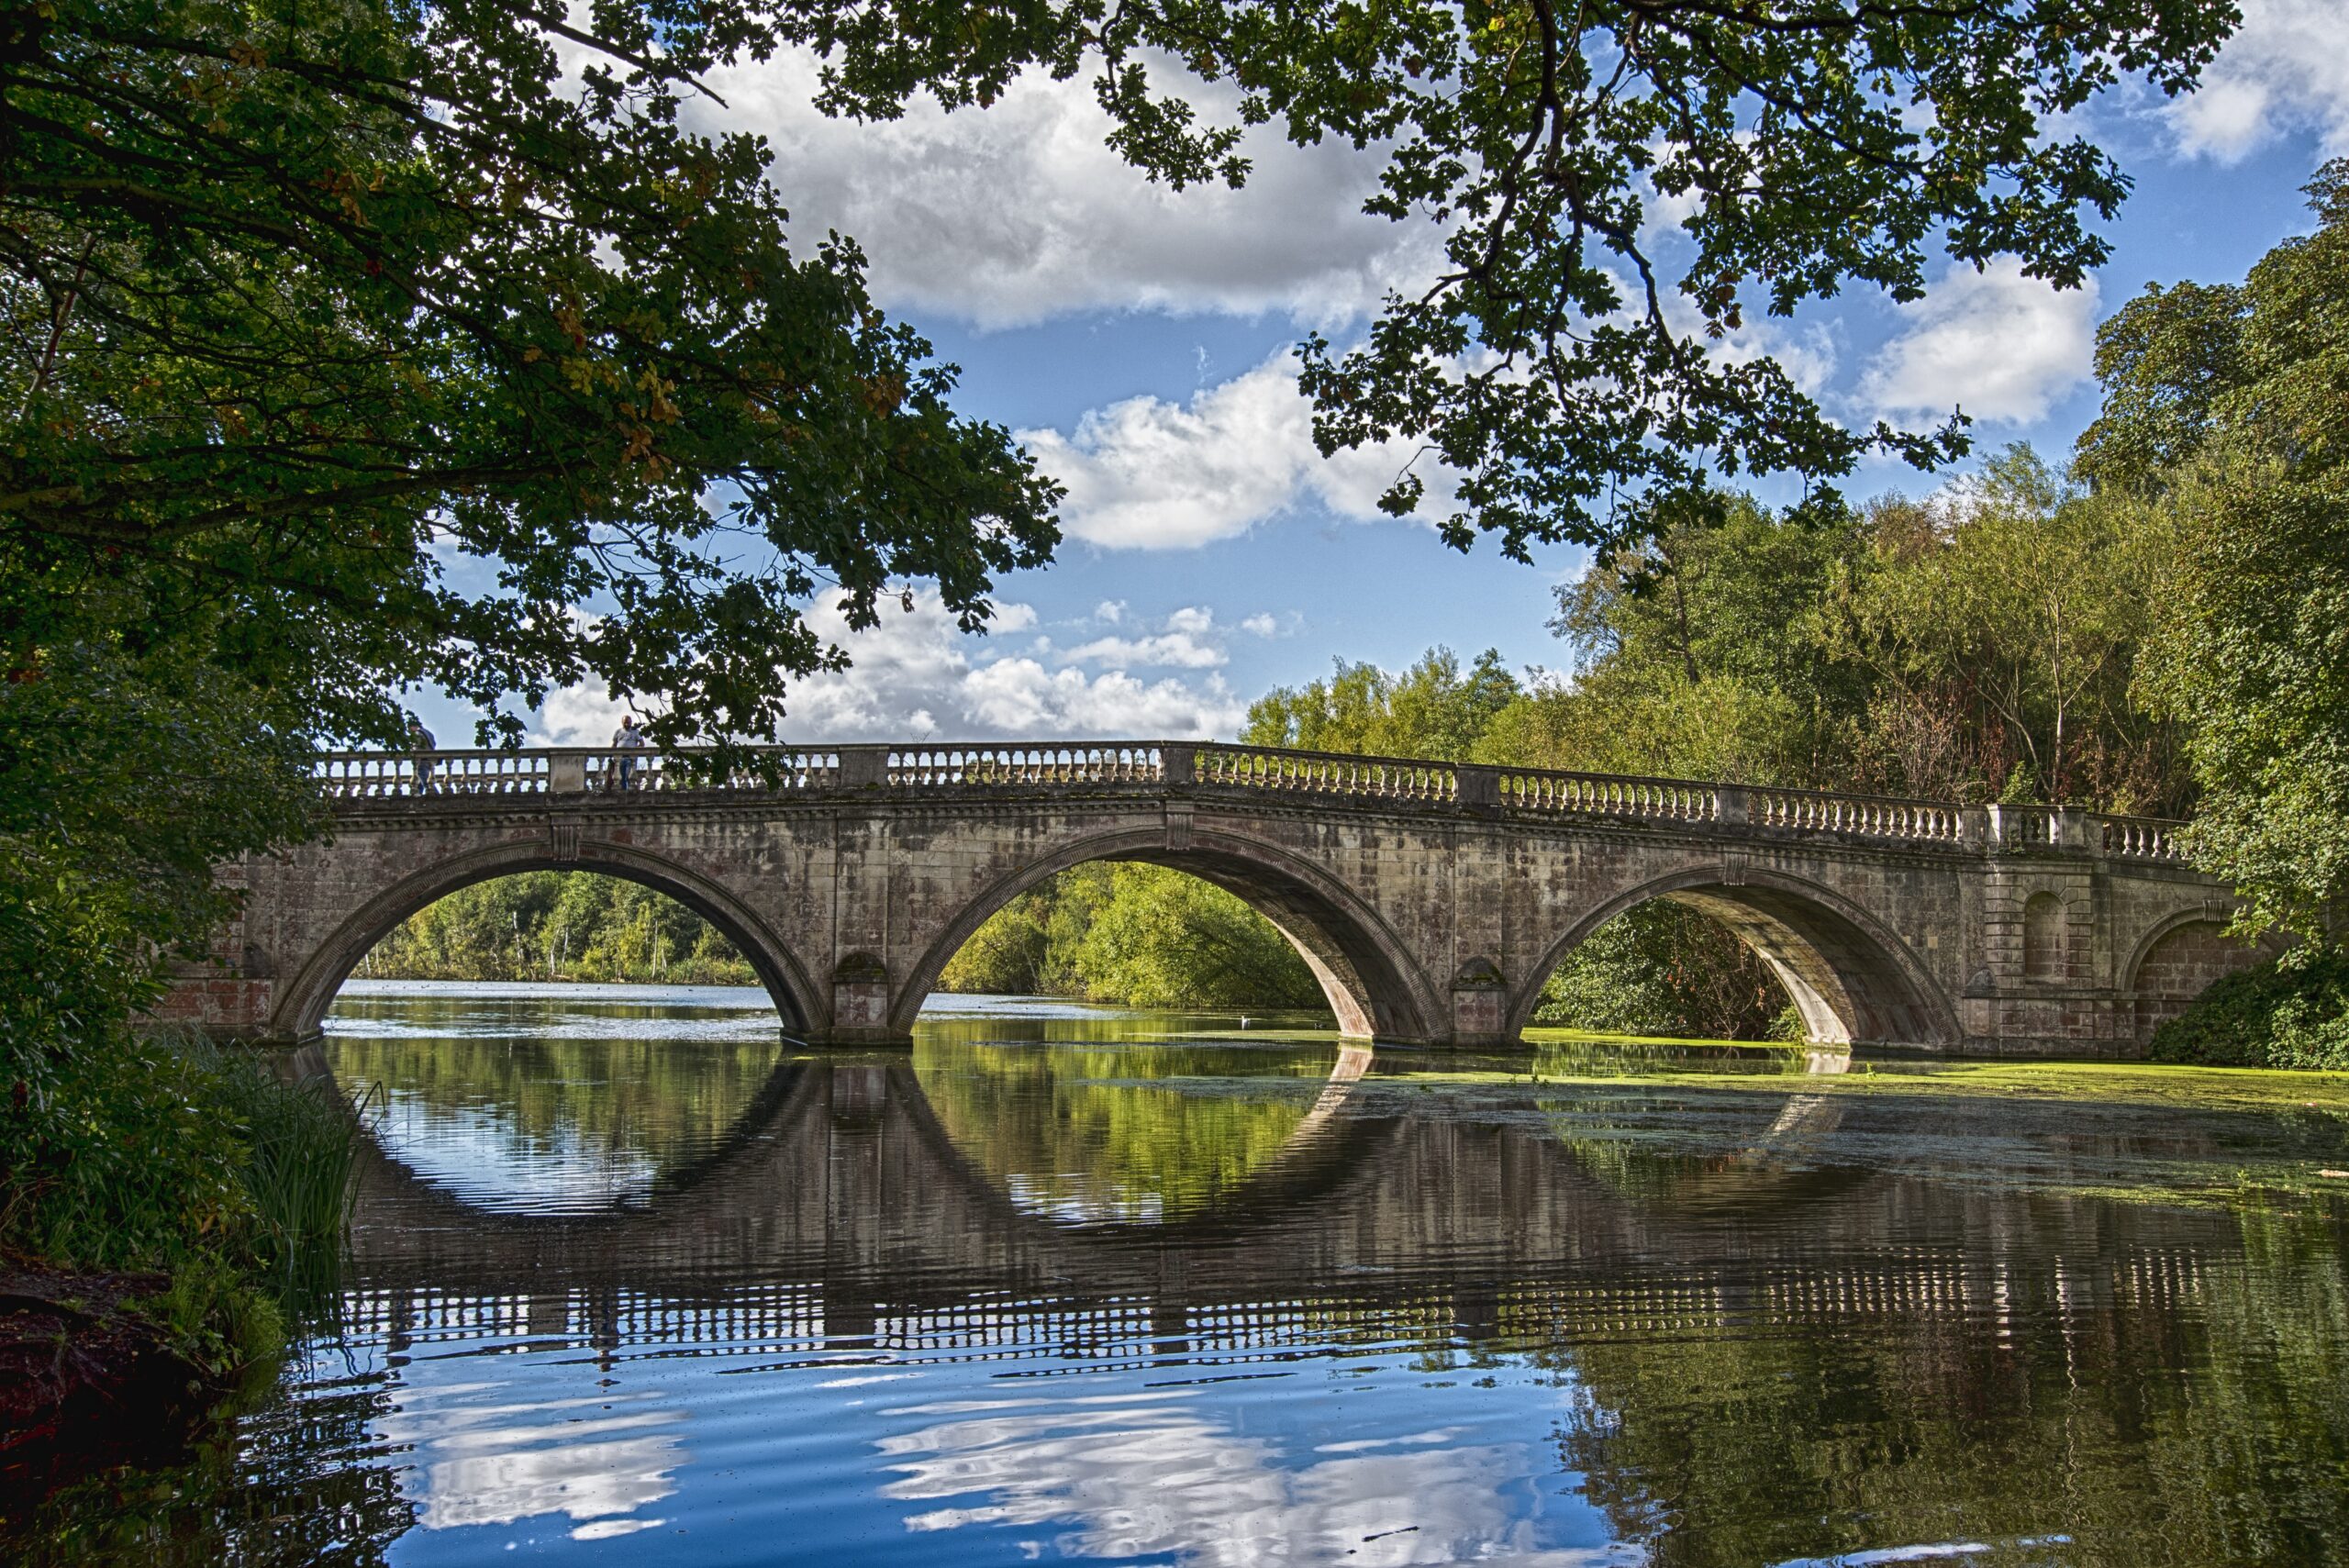 10 oldest bridges in the world